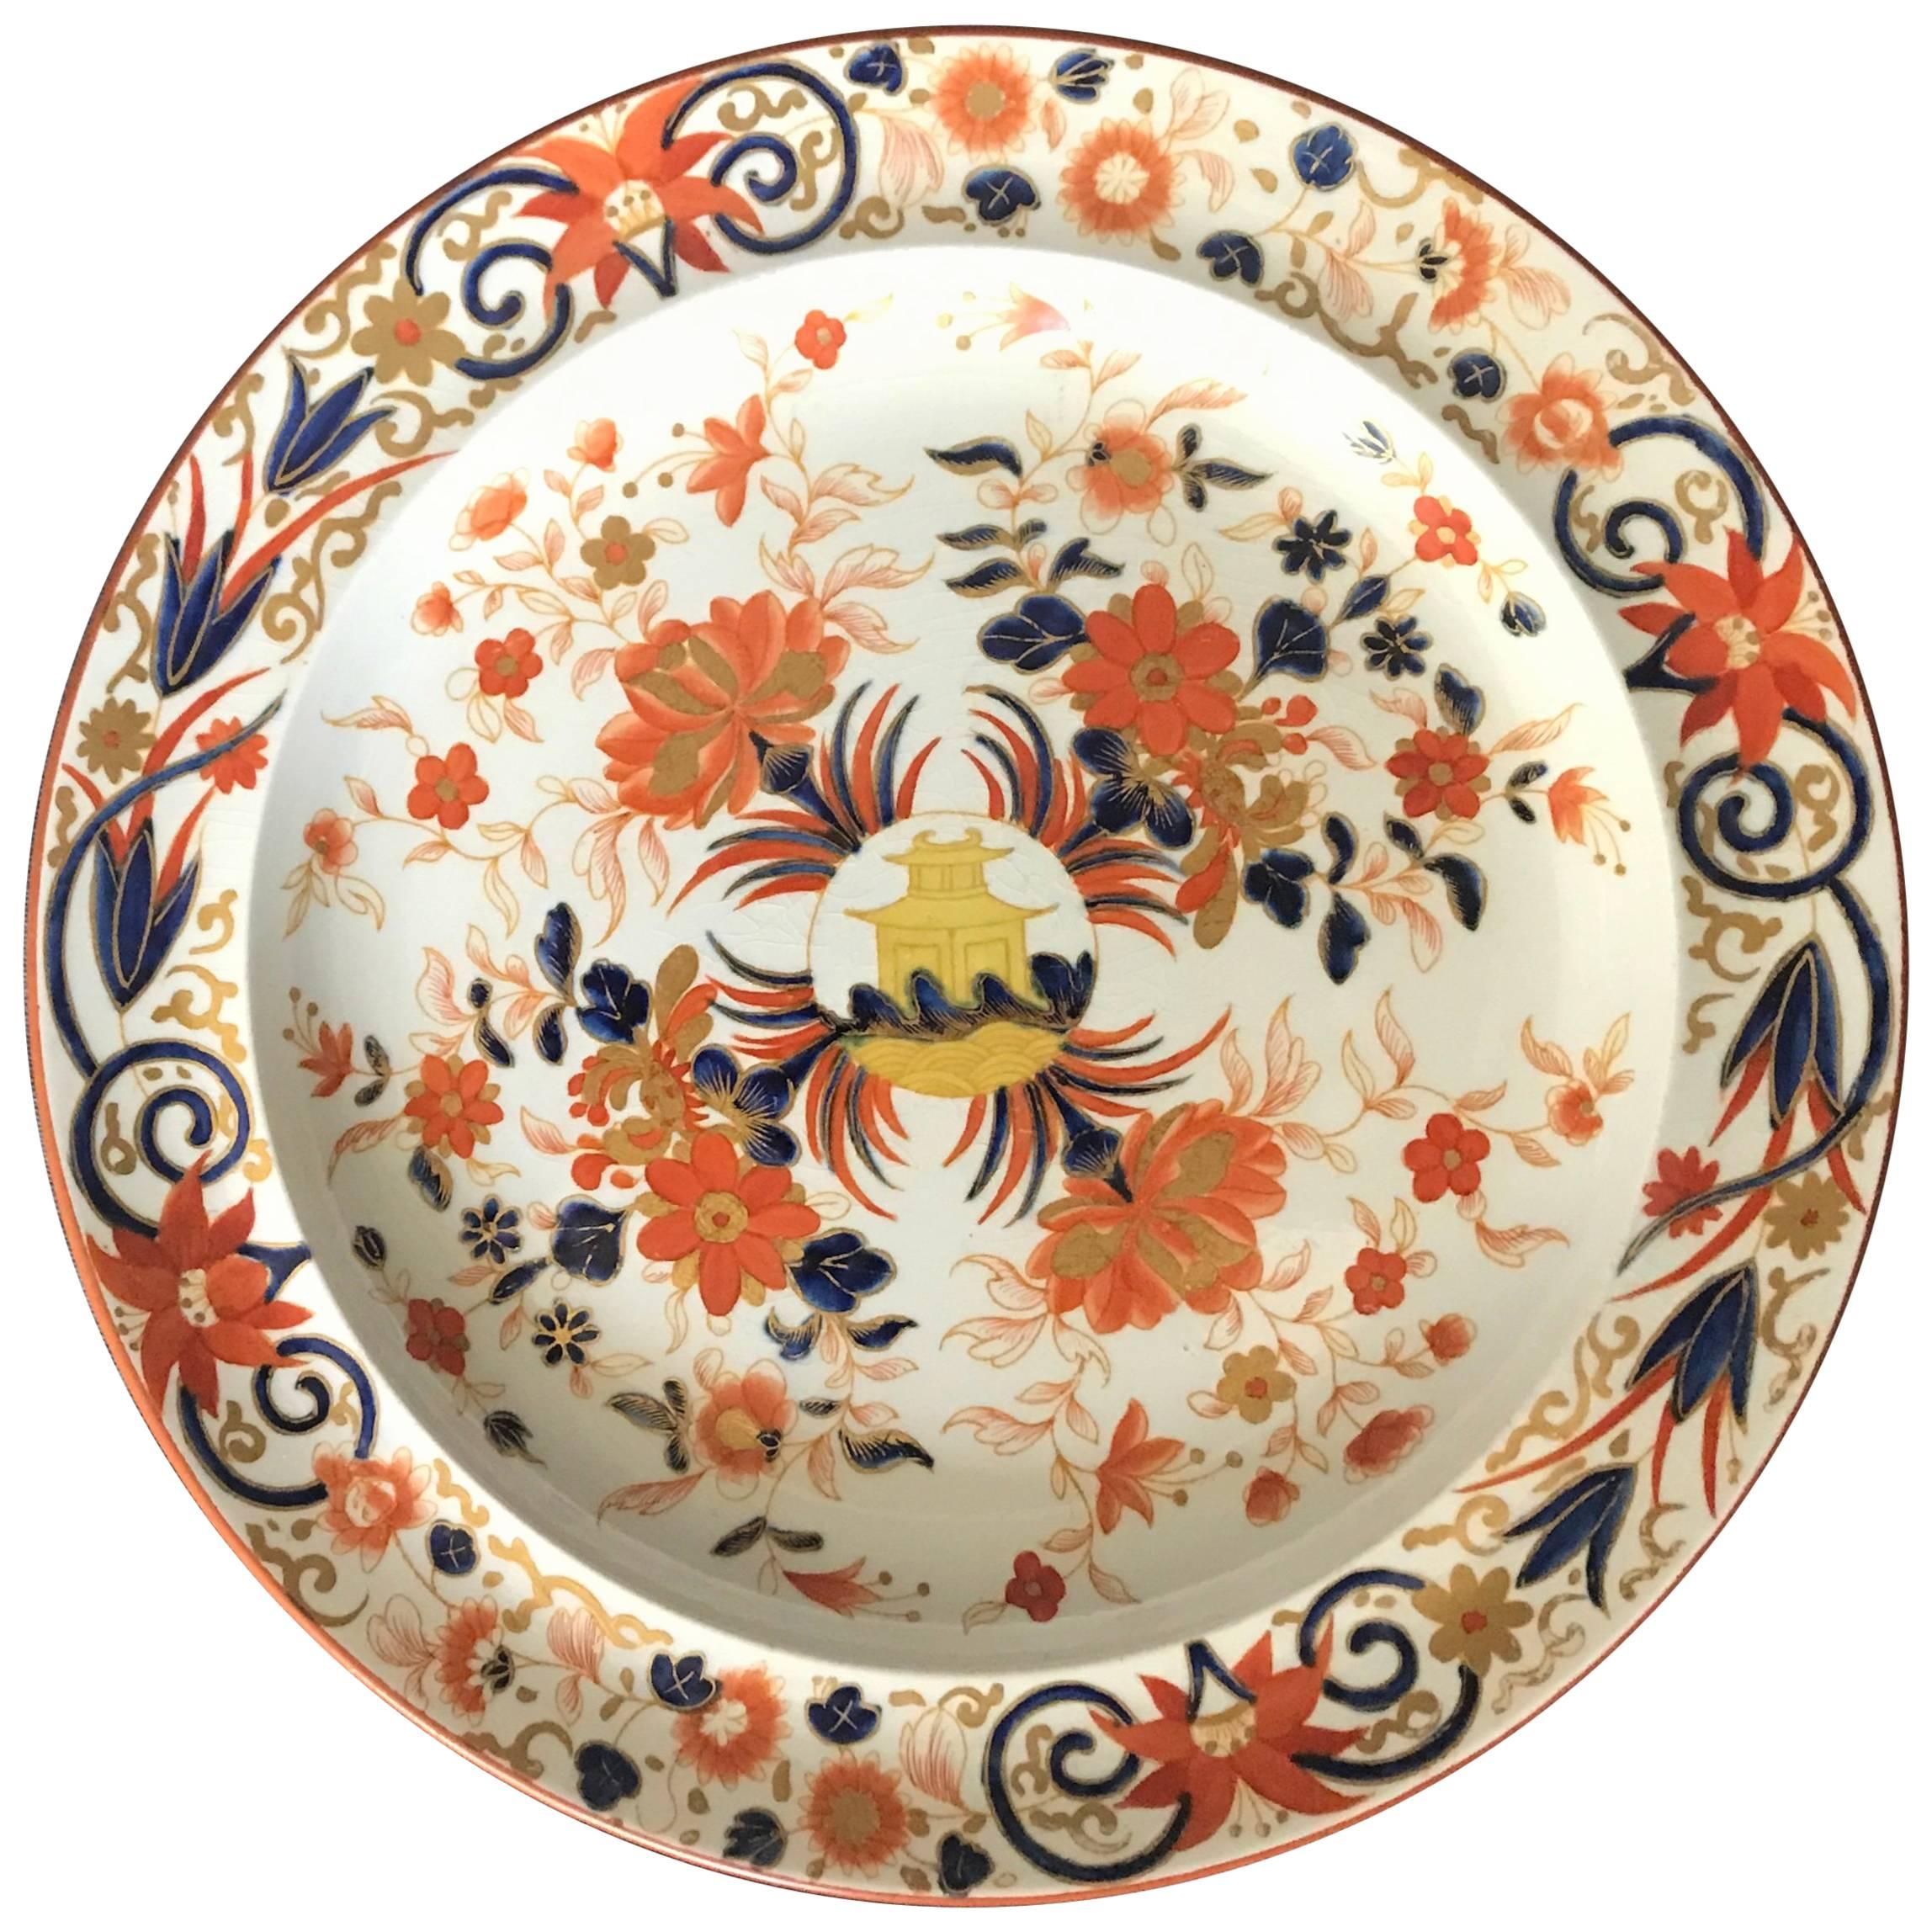 Wedgwood Pearlware Imari Decorated Plate